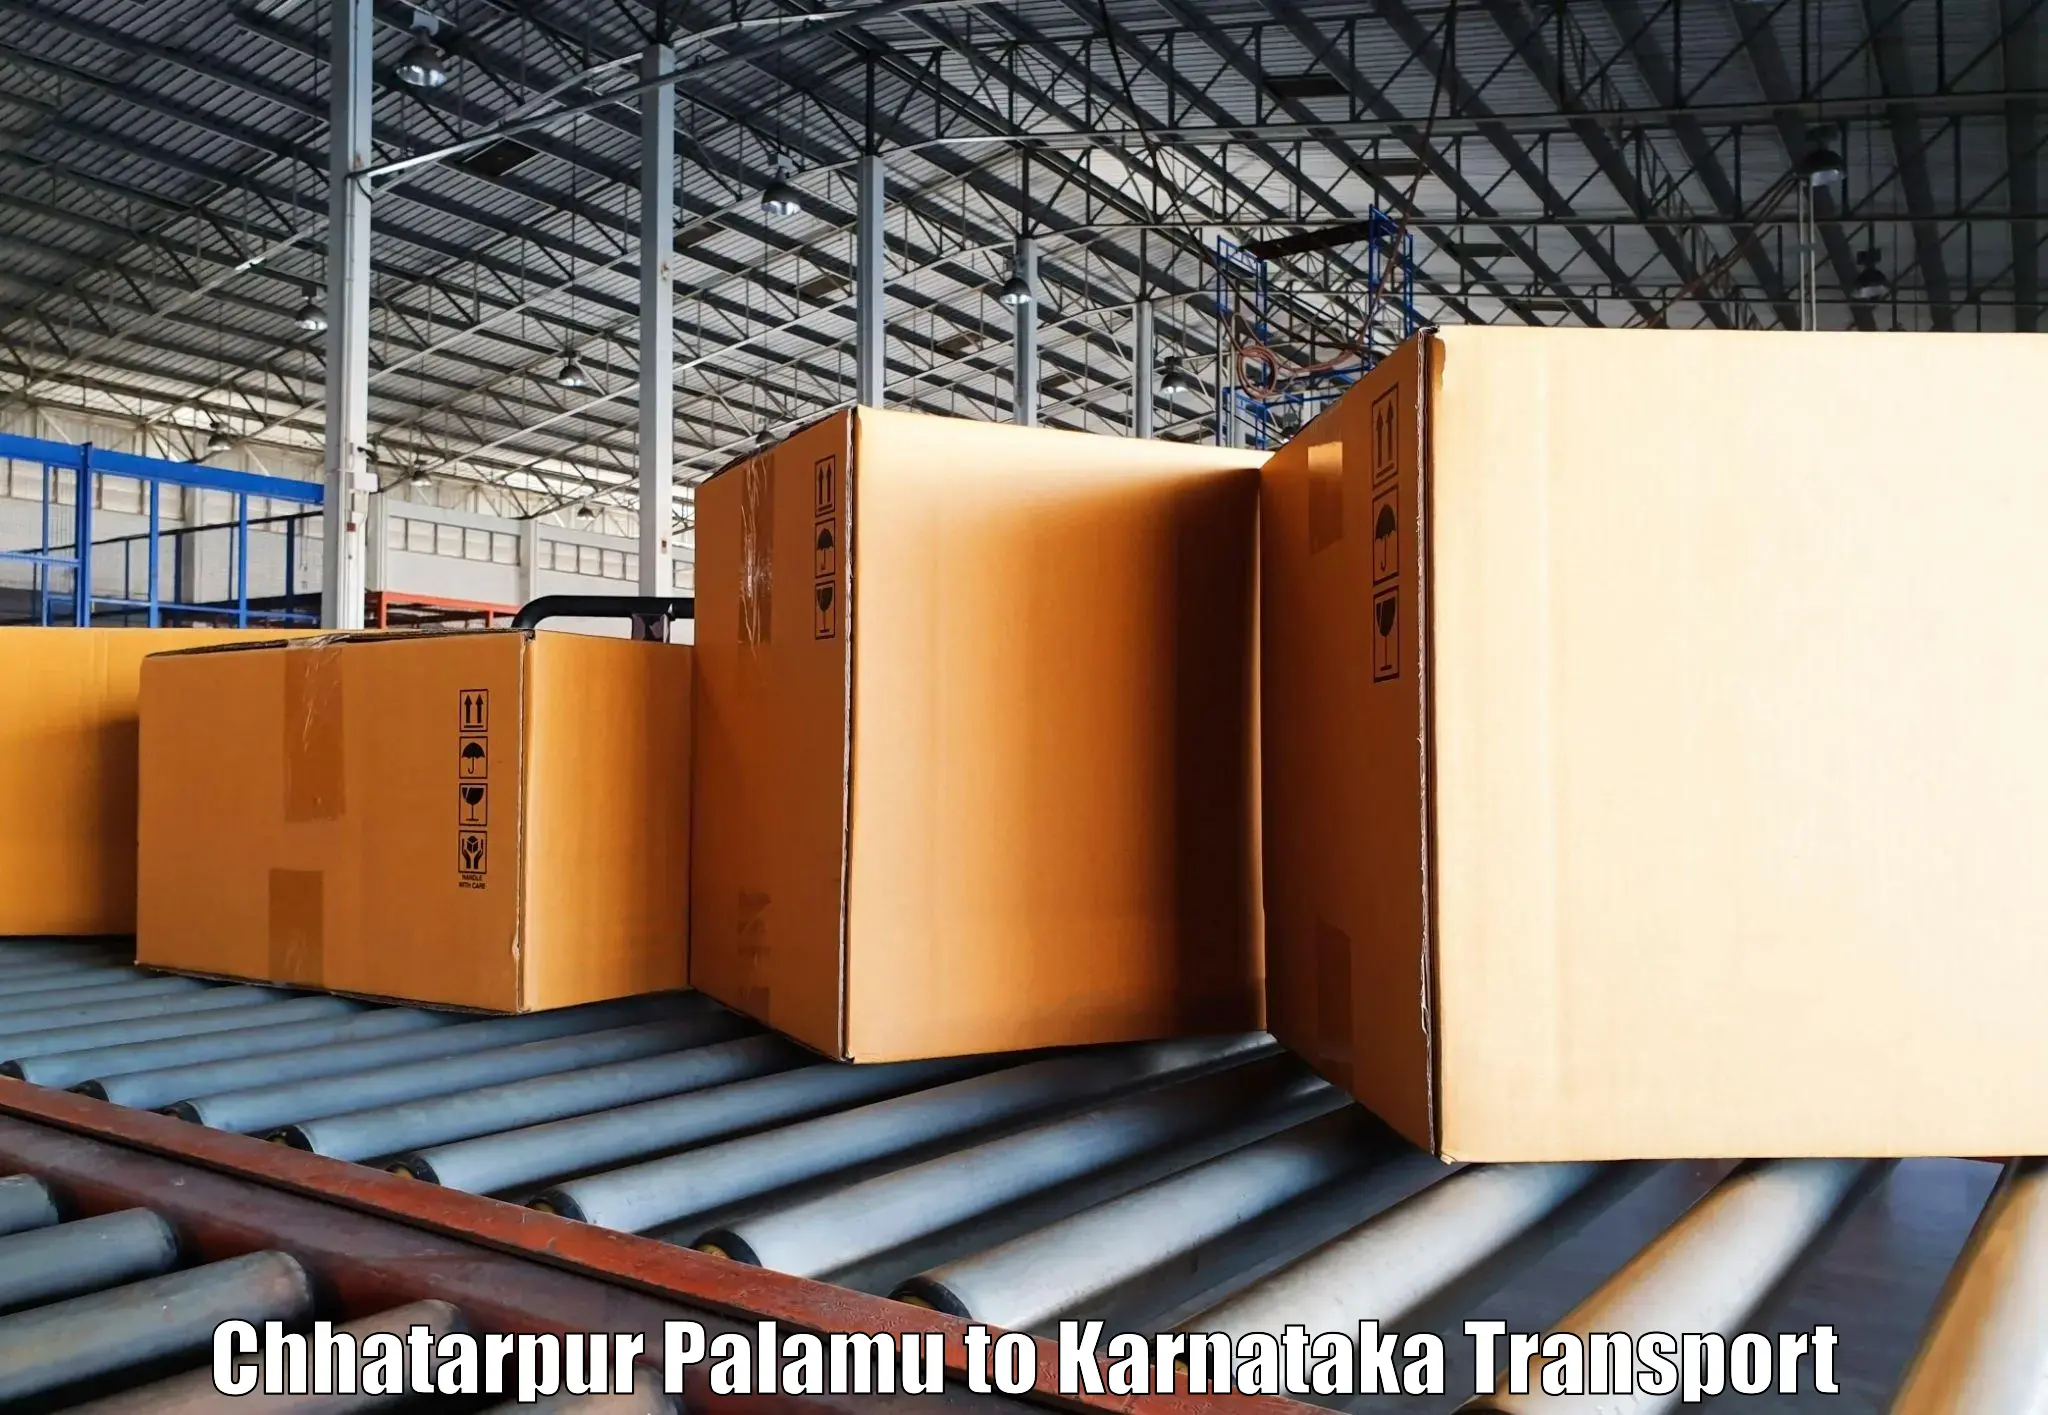 Package delivery services Chhatarpur Palamu to Channarayapatna